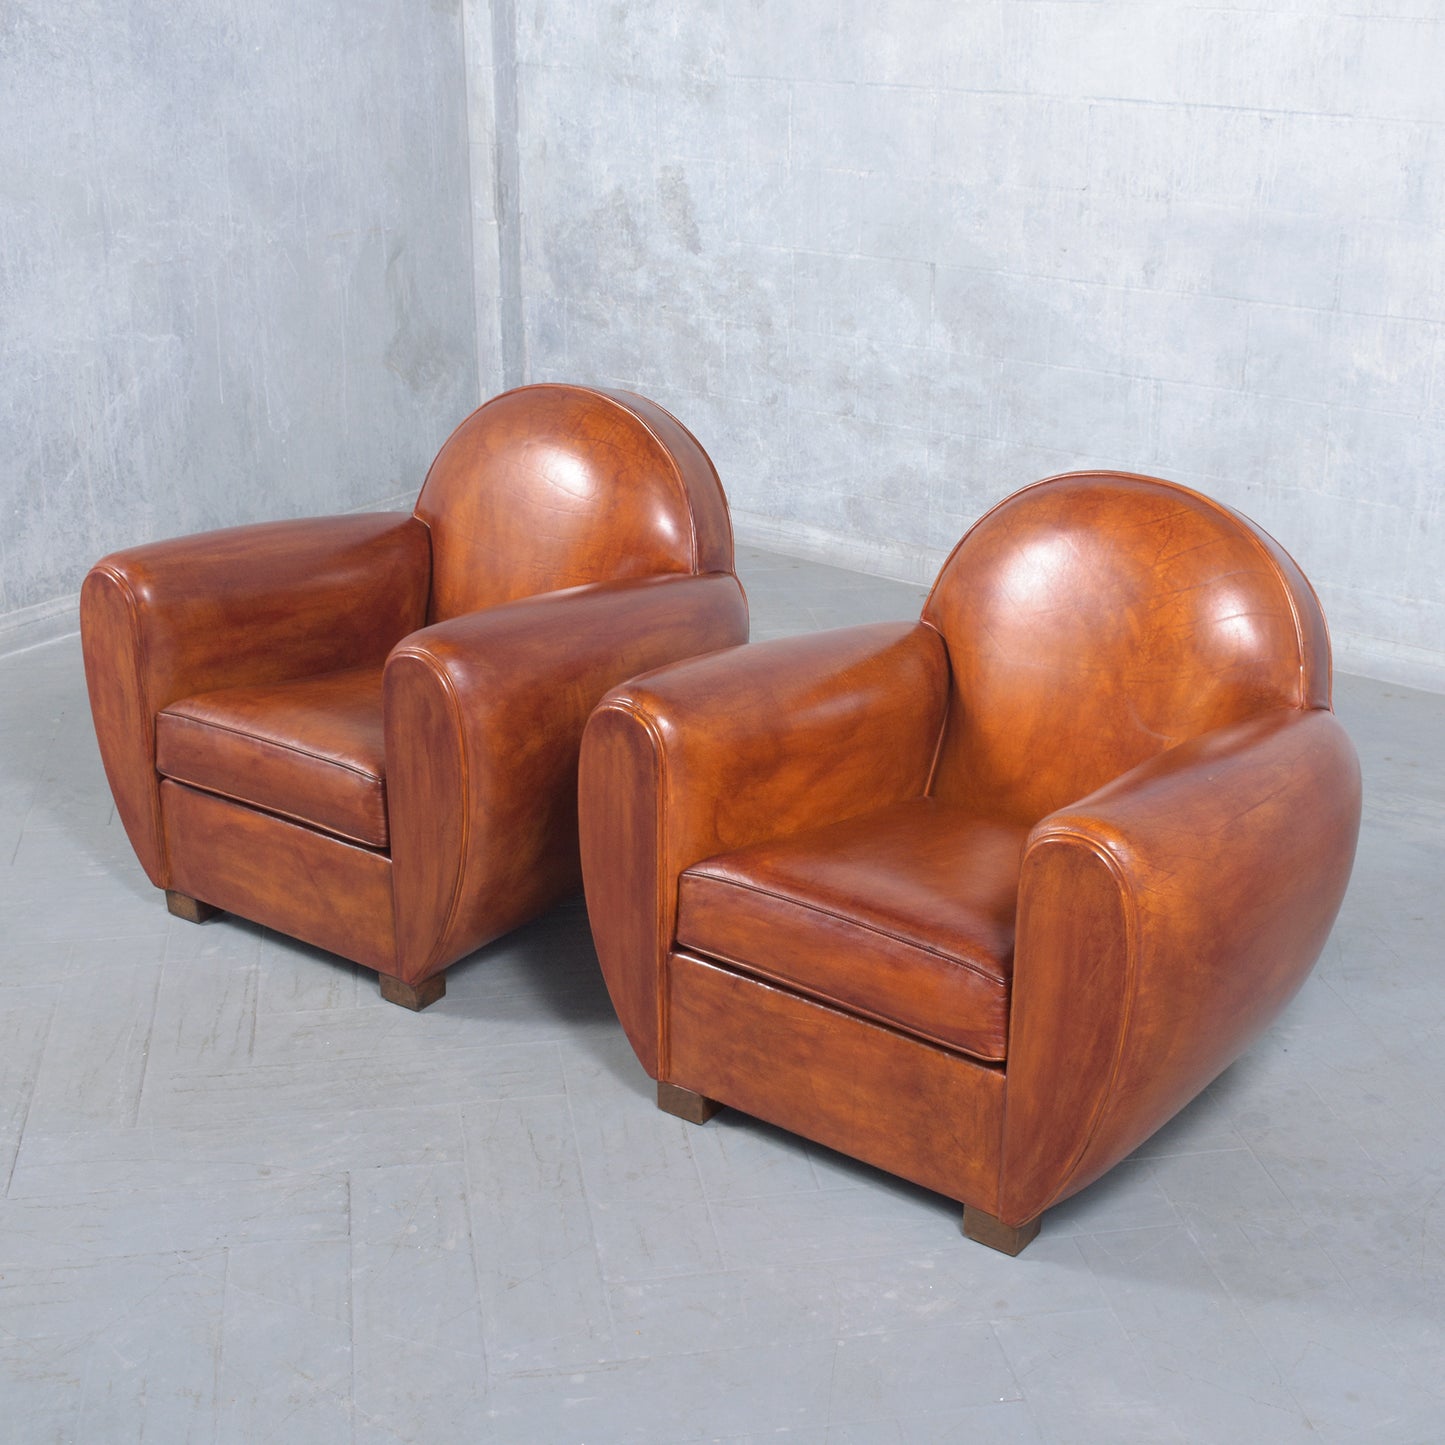 Restored Art Deco Club Chairs: 1960s French Deco Elegance